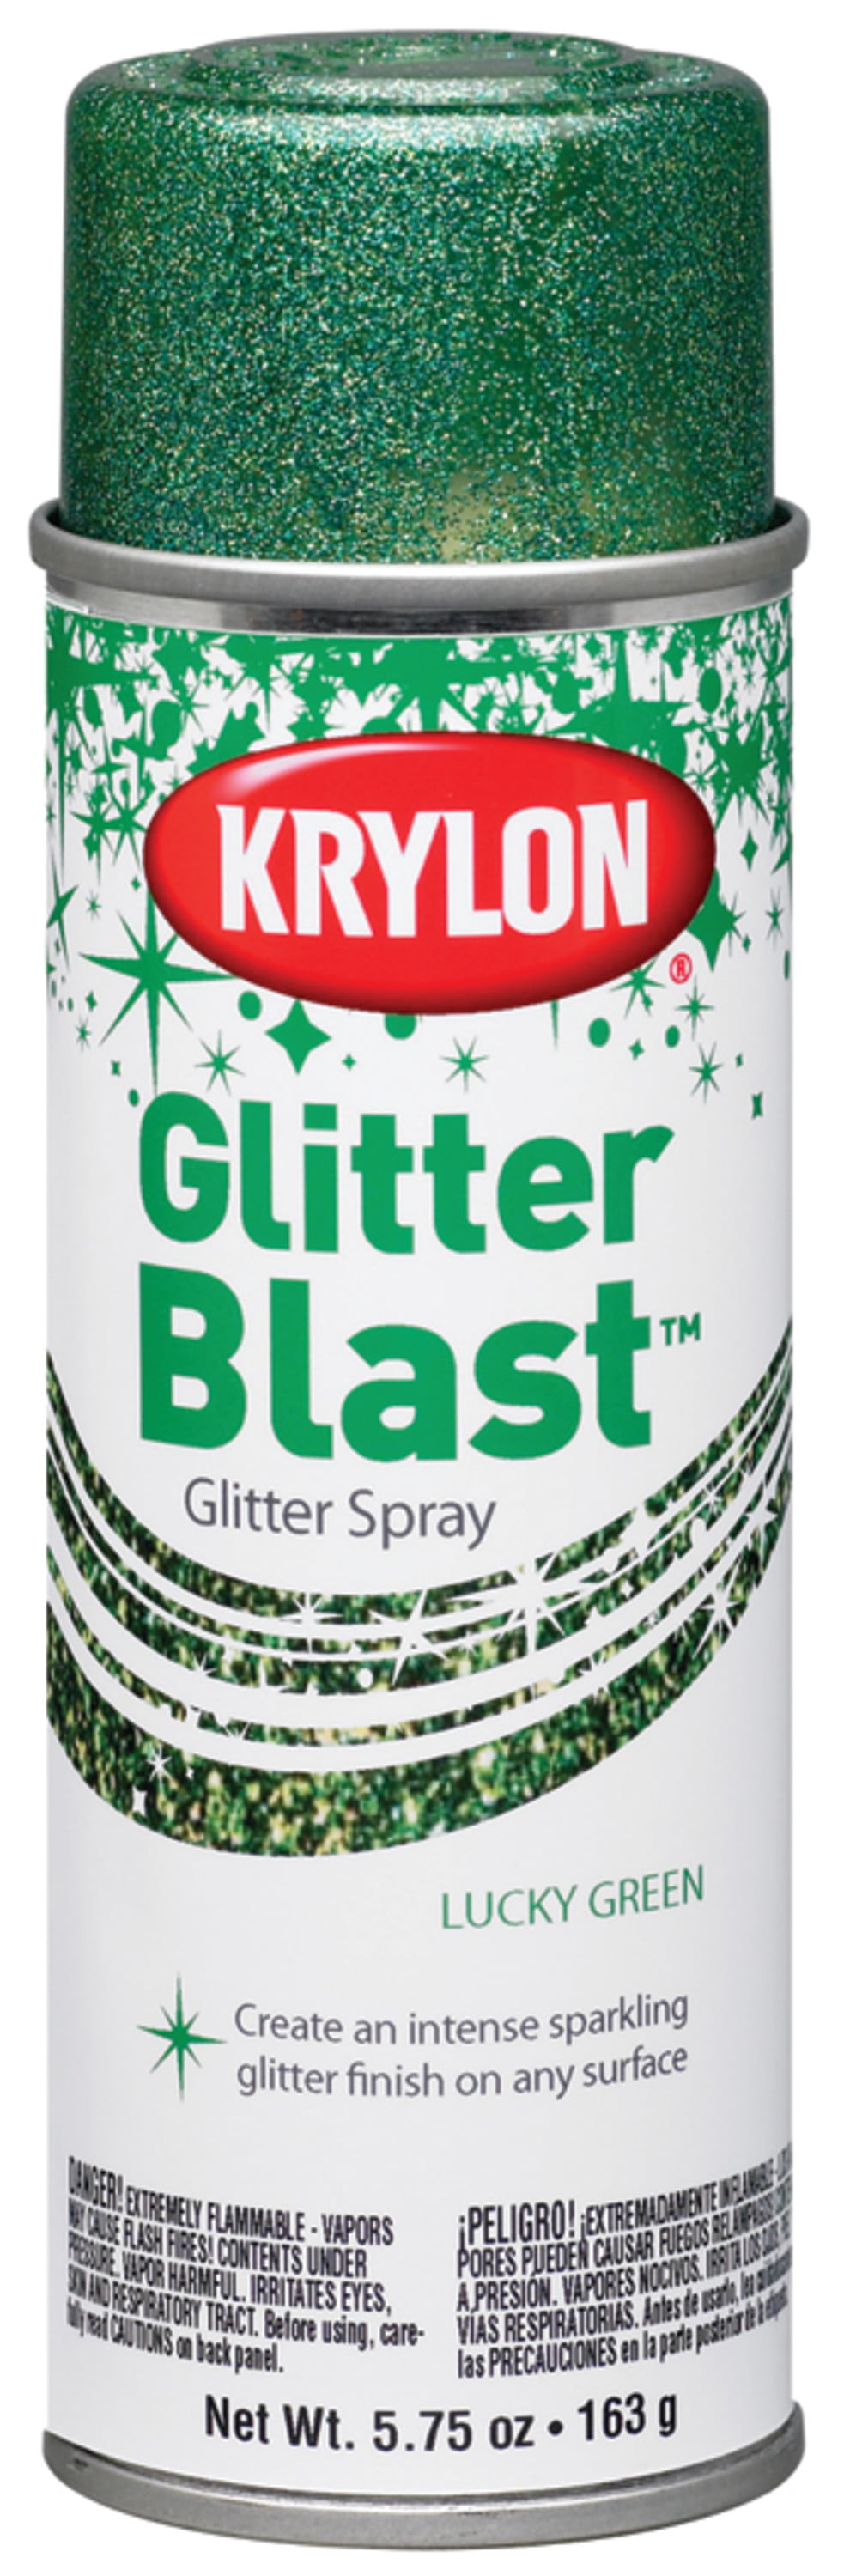 krylon glitter blast spray paint golden glow 10.25 Oz (discontinued Can)